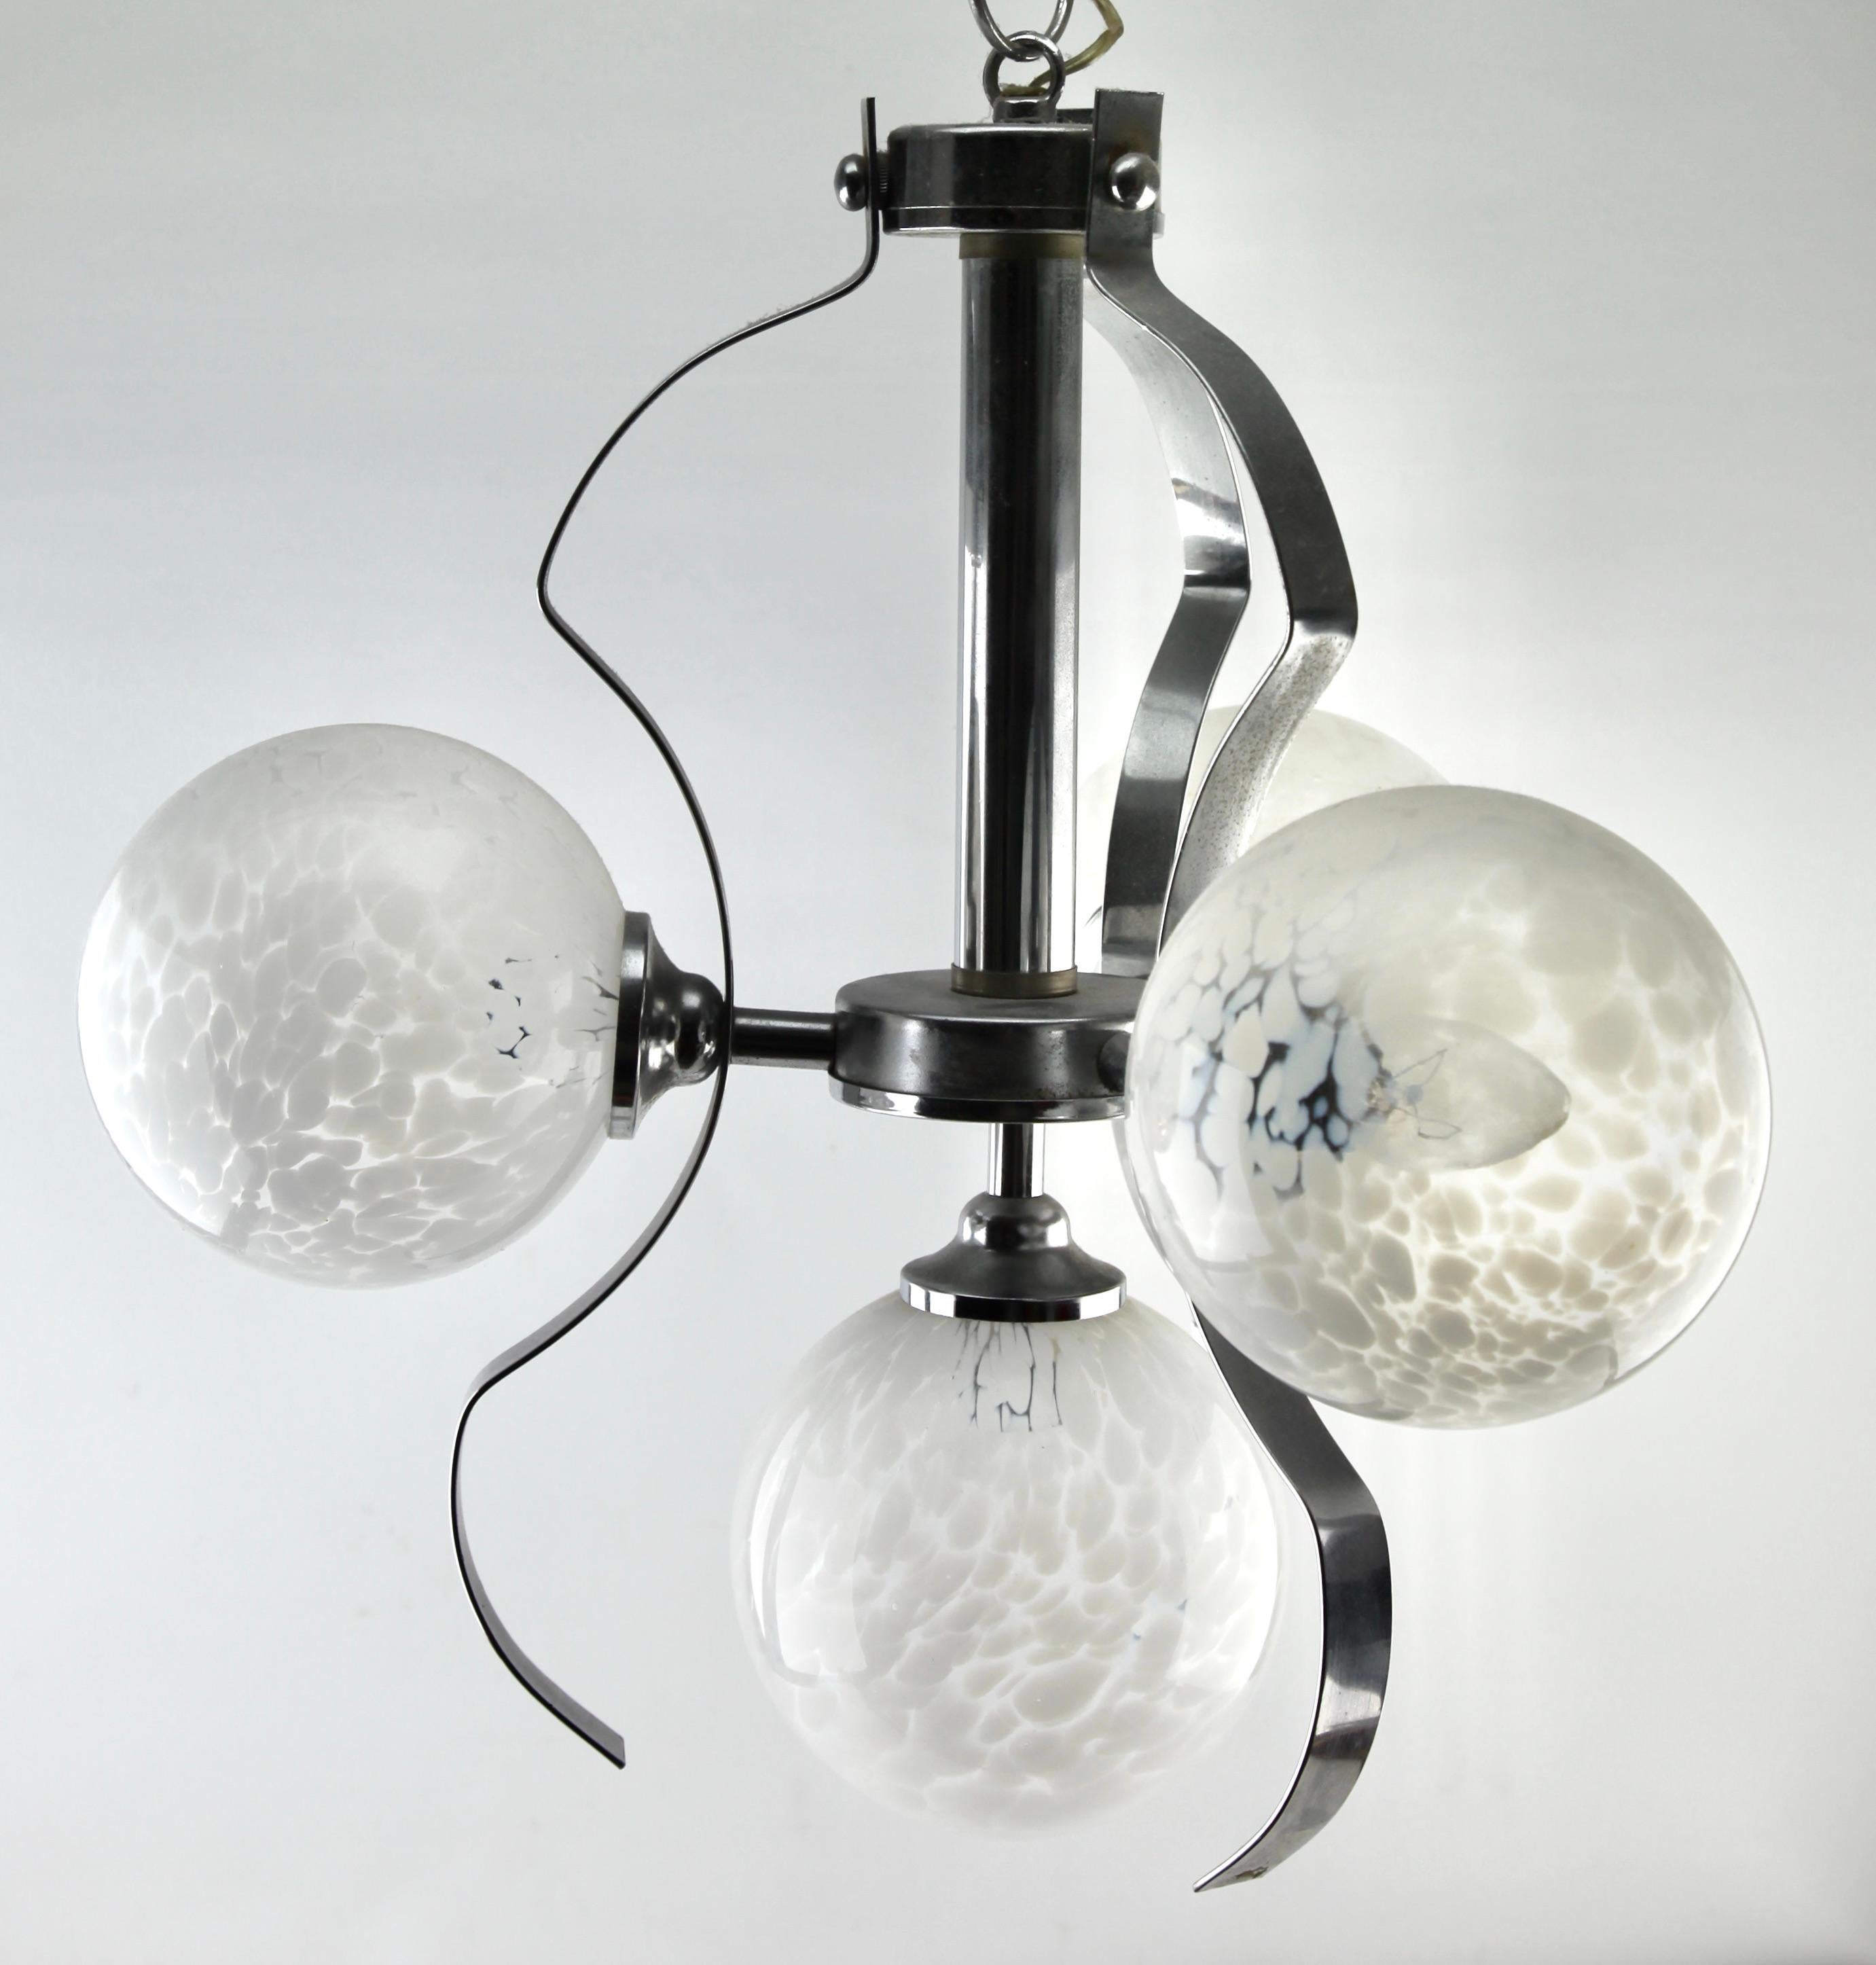 Space Age Fischer Leuchten ‘Germany’ Swirl Ball Pendant Stem Lamp with 3 Globular Lights For Sale